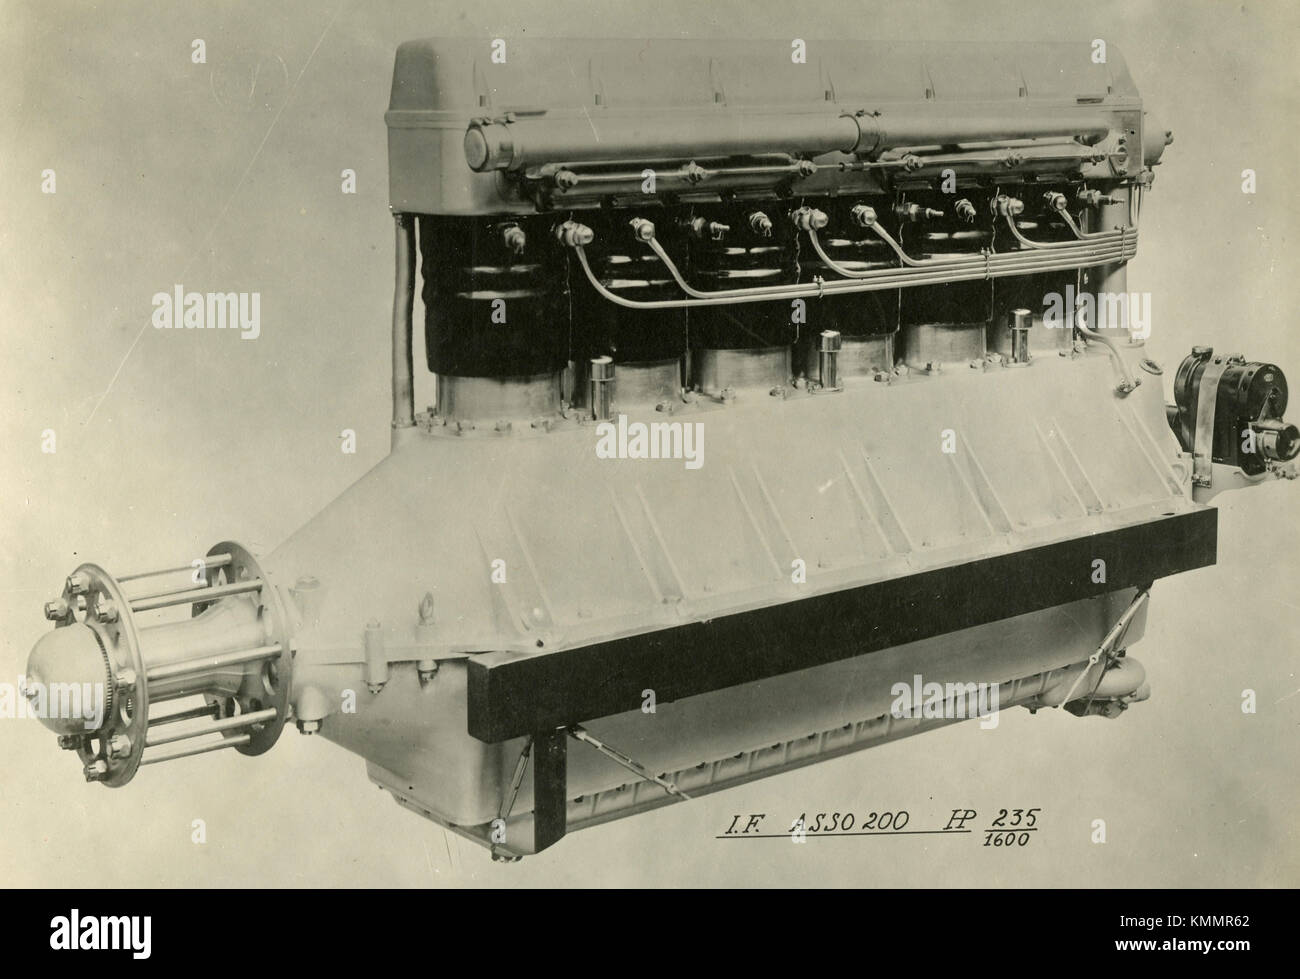 Aviation engine Isotta Fraschini Asso 200, HP 235, Italy 1920s Stock Photo